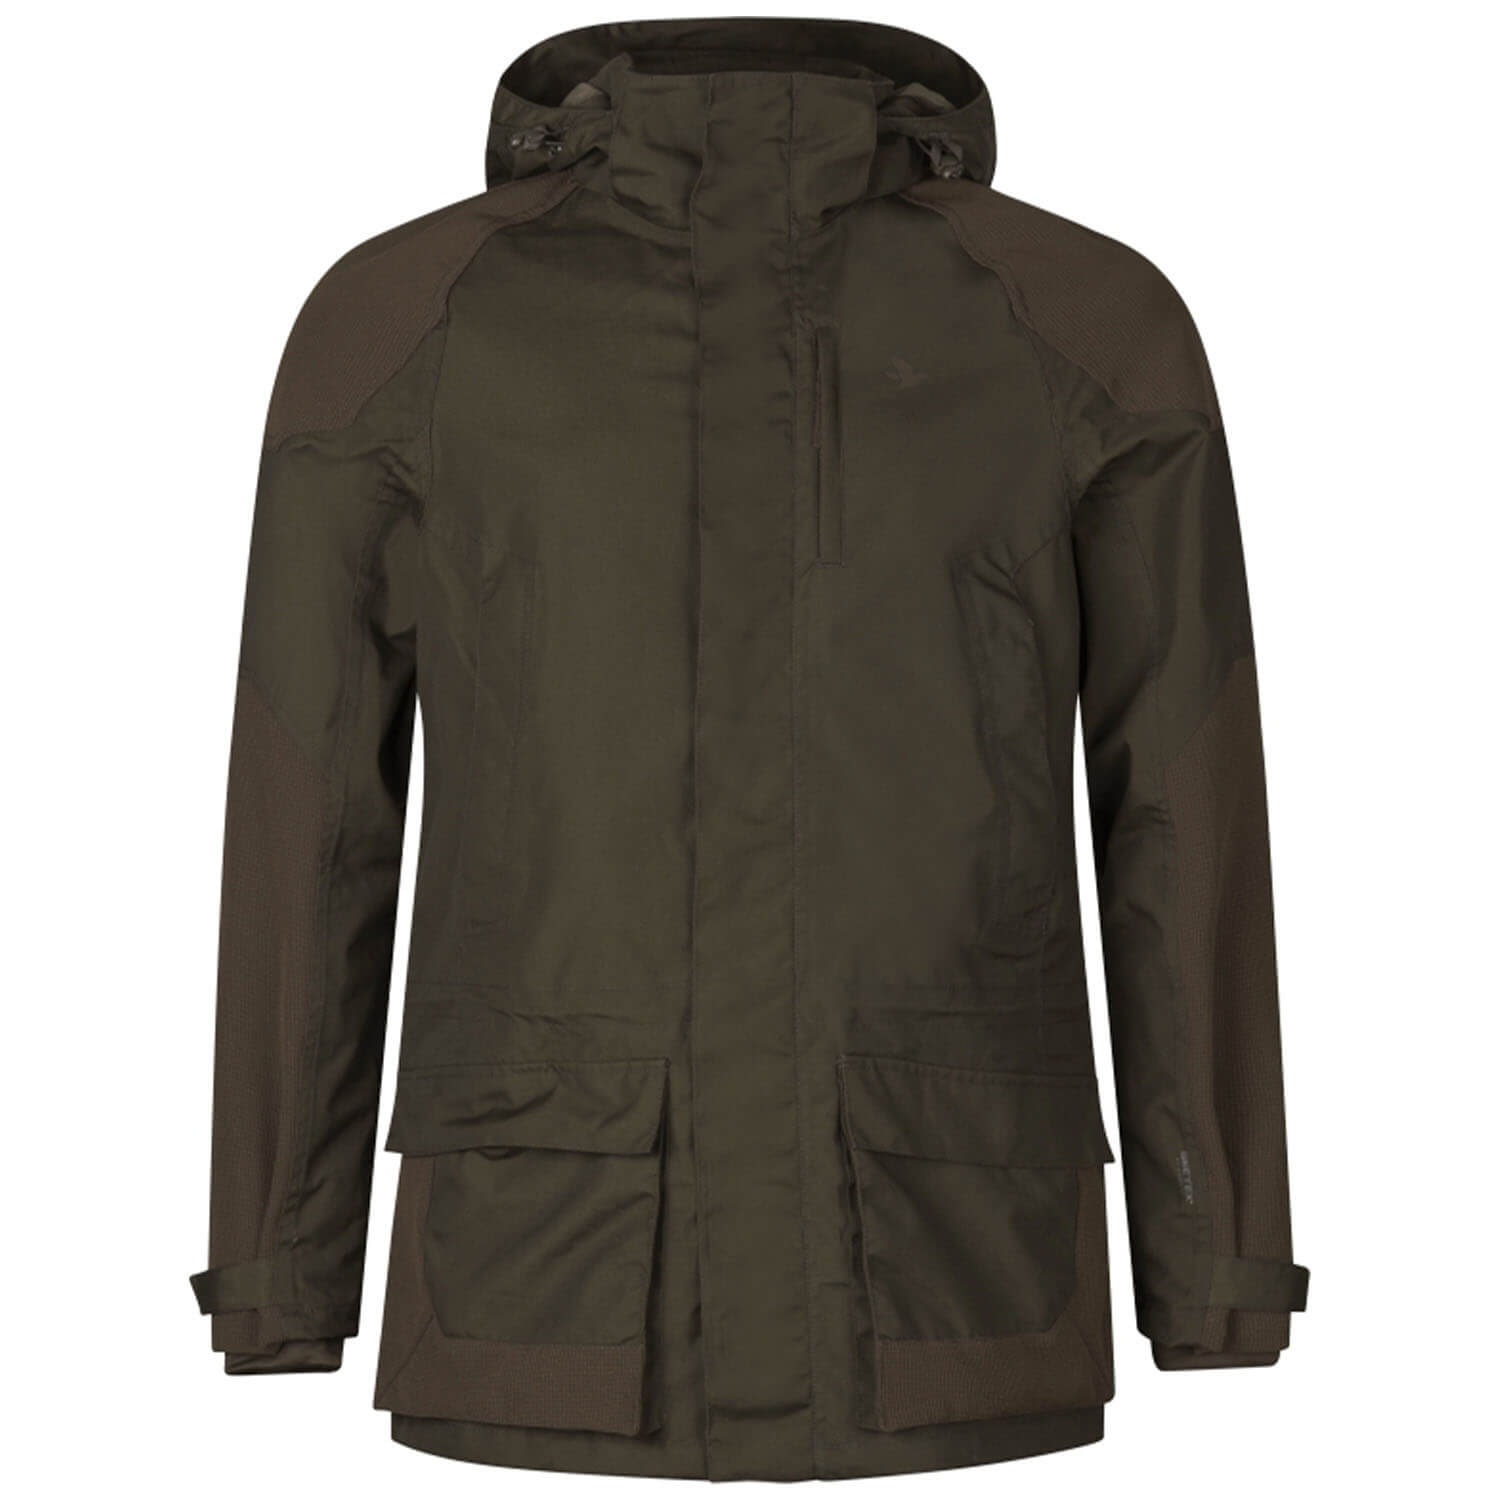 Seeland hunting jacket Arden (pine green) - Hunting Jackets